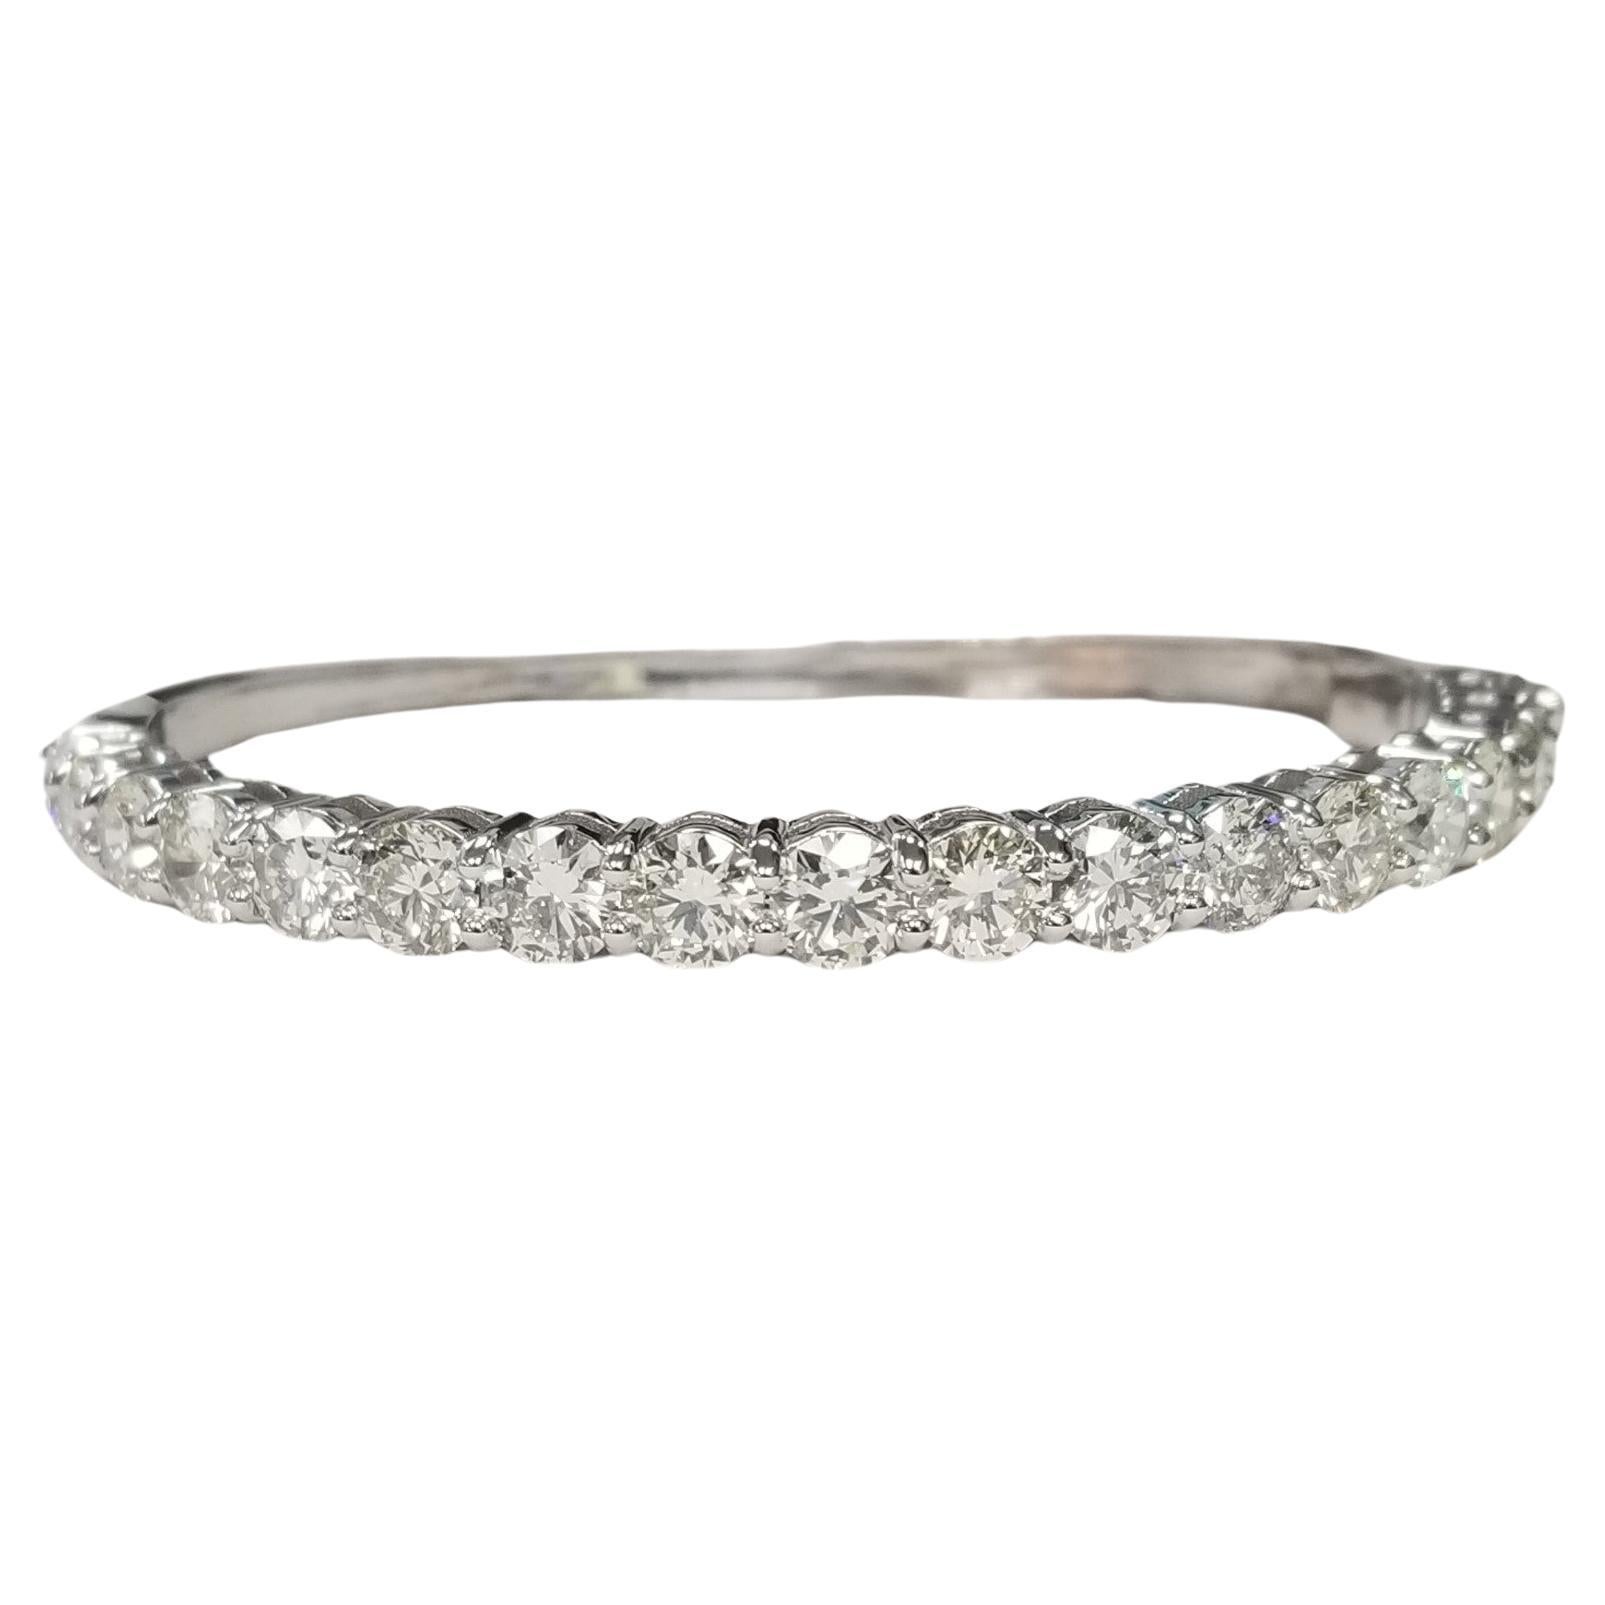 Gorgeous 14k White Gold Diamond "Bangle" Bracelet Weighing 9.30cts.